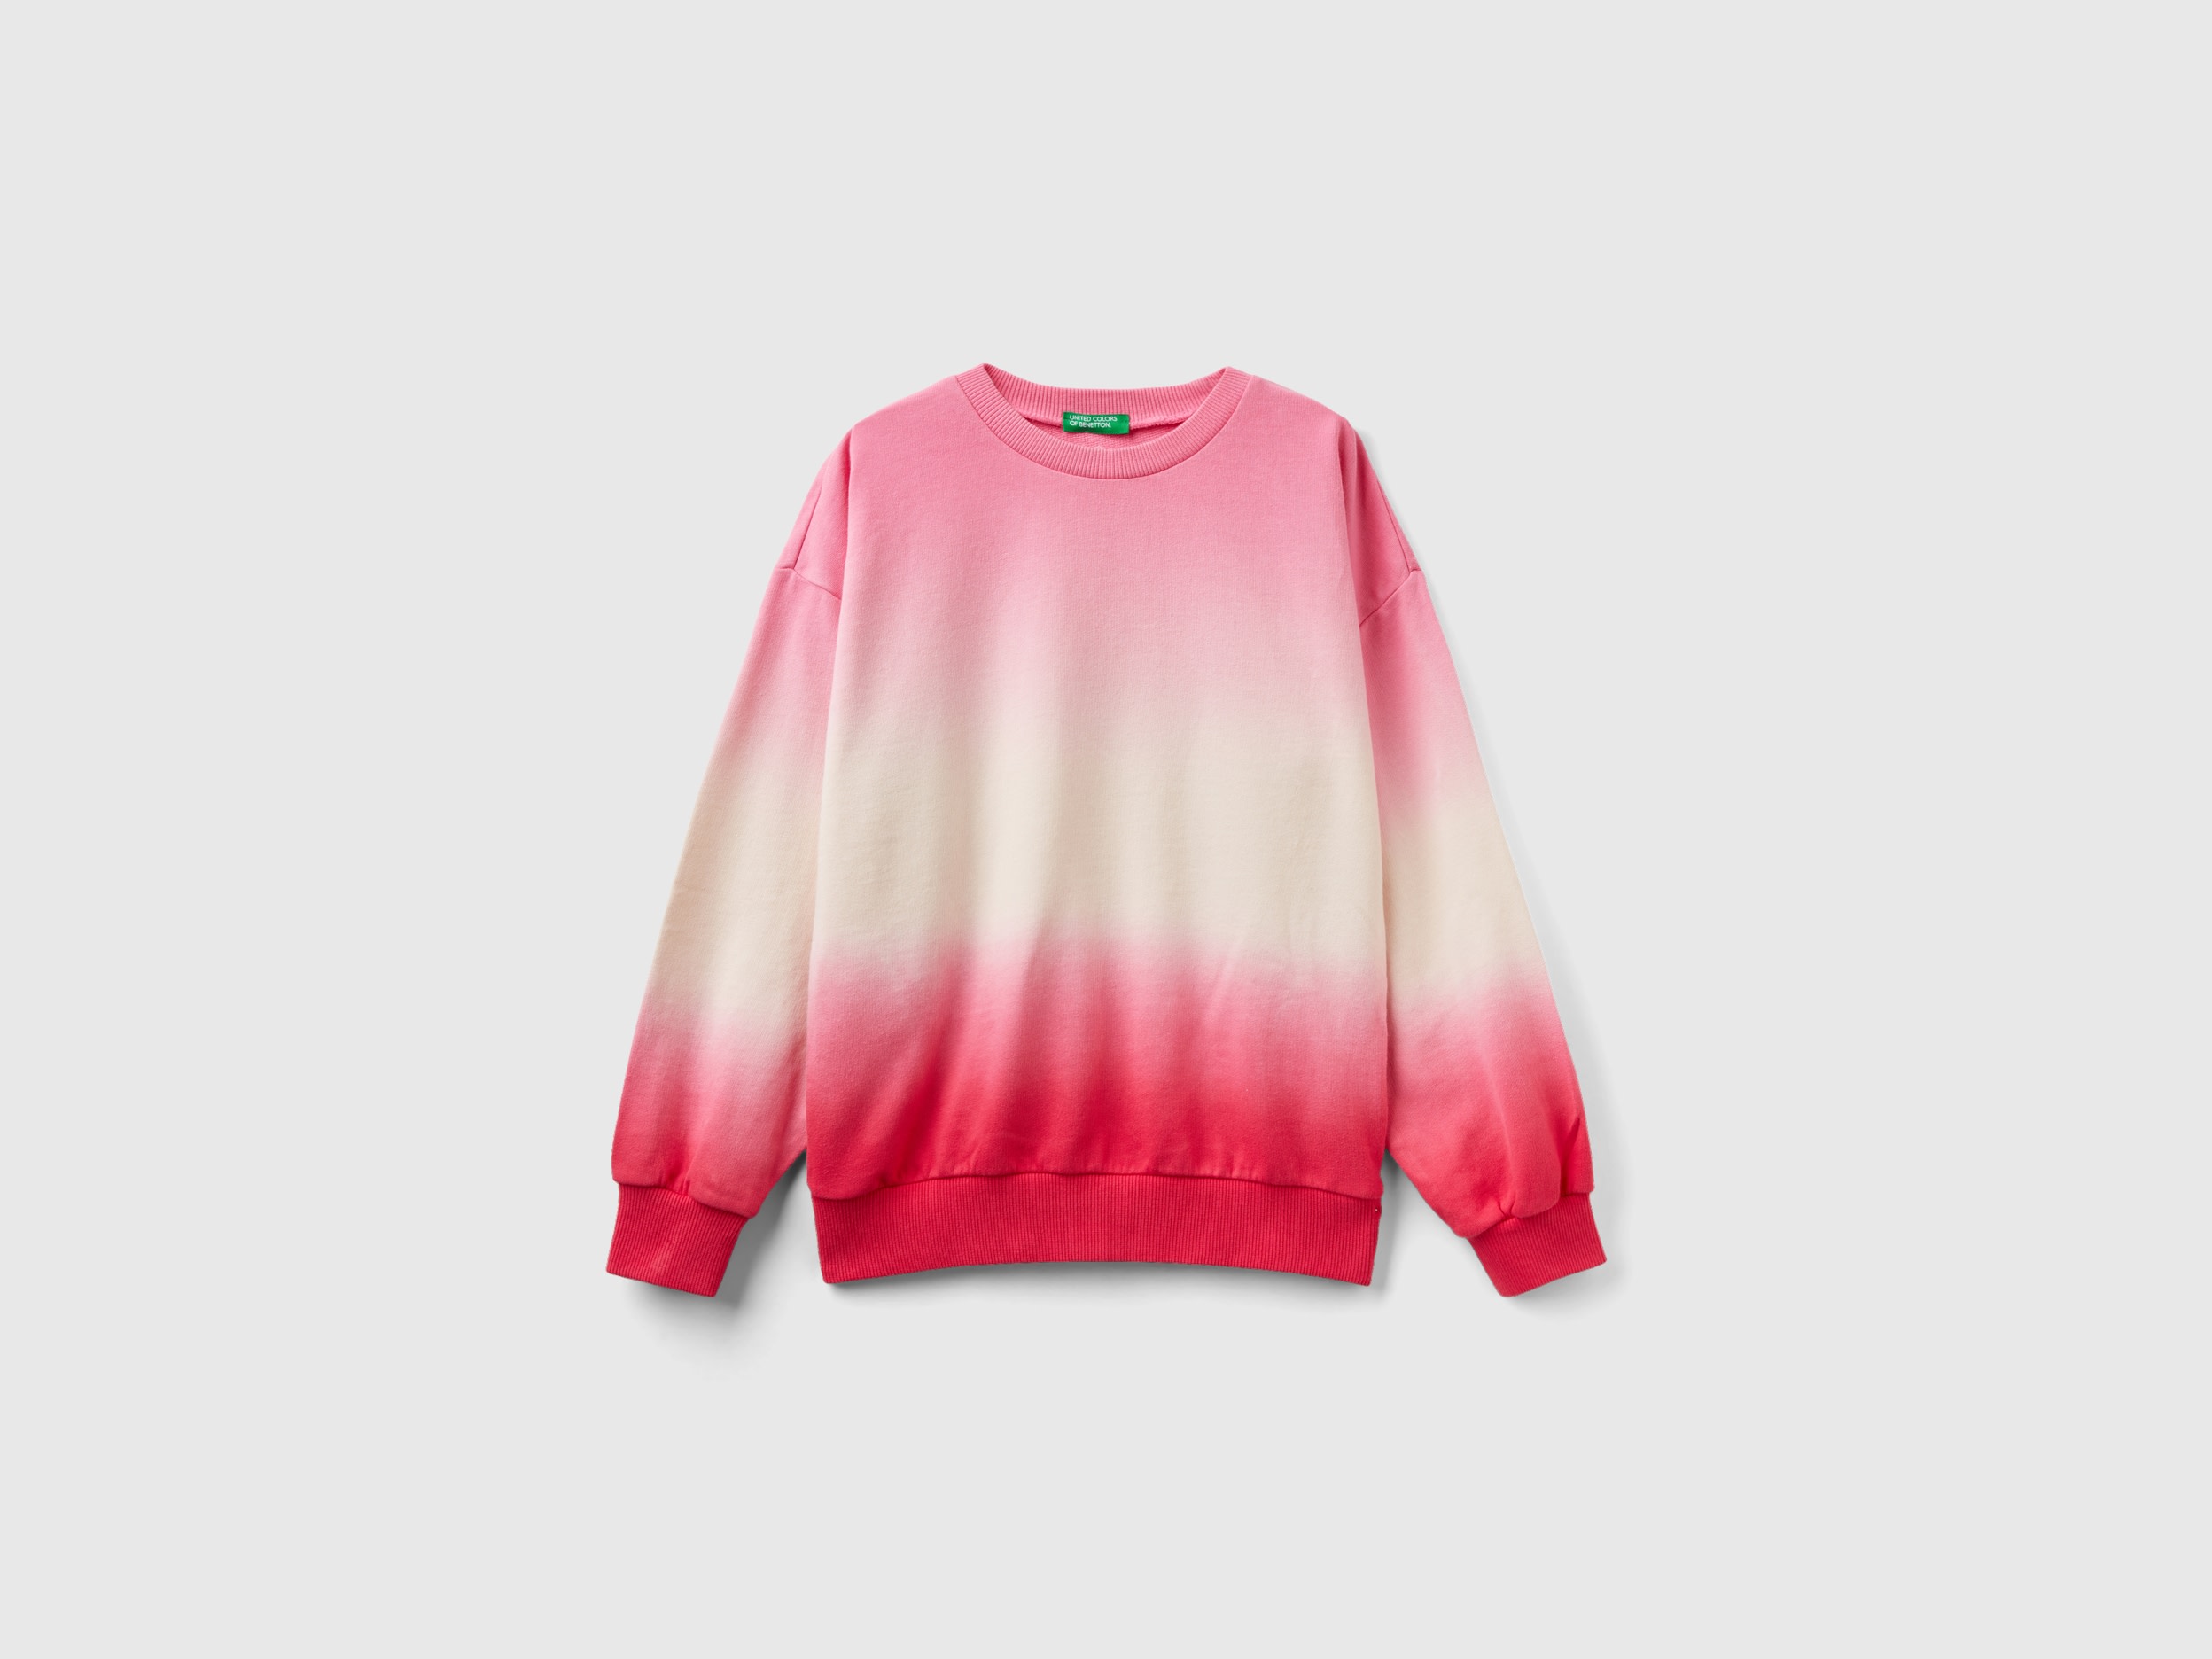 Benetton, 100% Cotton Crew Neck Sweater, size 2XL, Pink, Kids